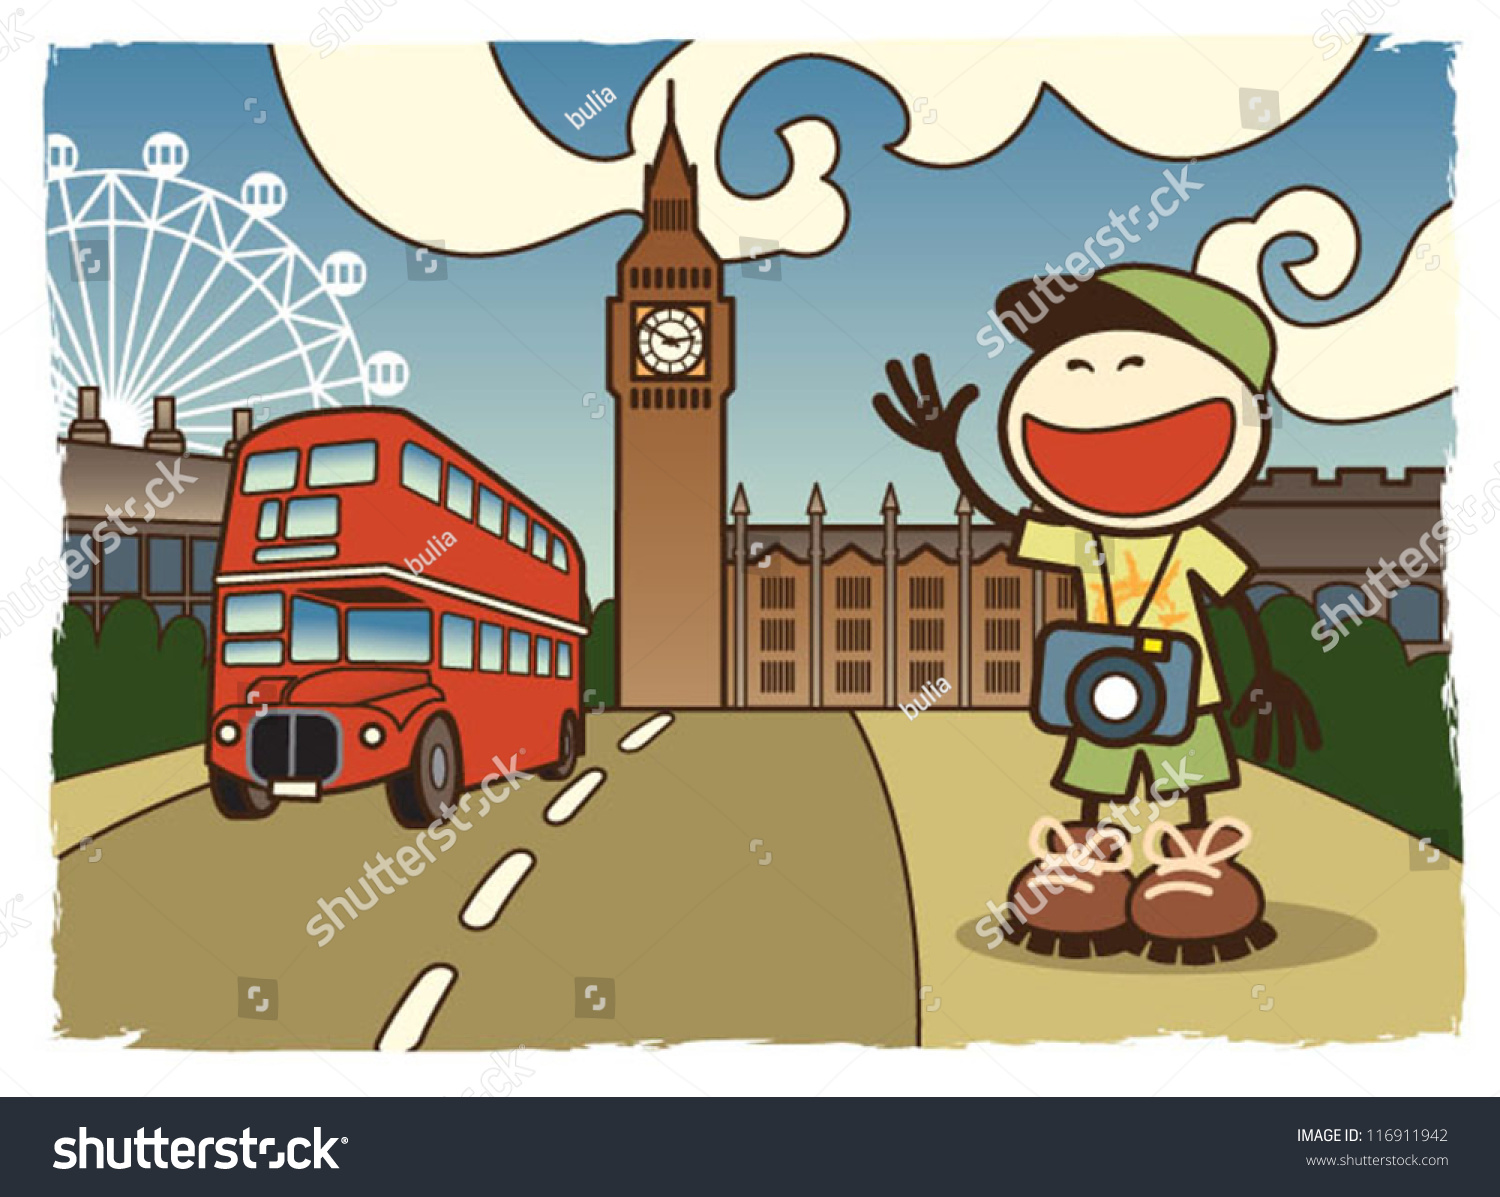 Happy Tourist In London - Vector - 116911942 : Shutterstock